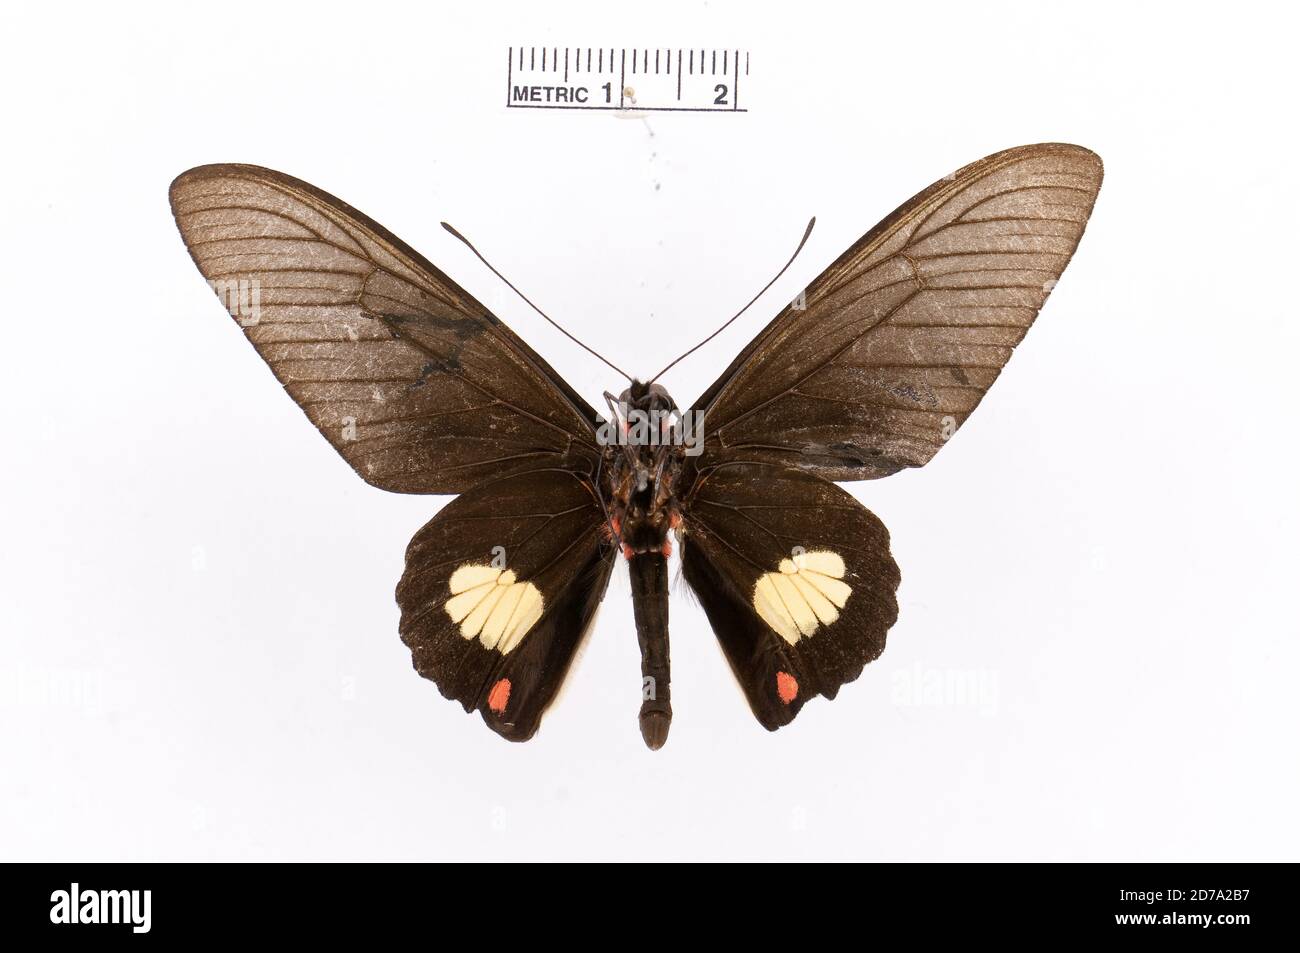 Punaisé, Parides quadratus, Animas, Arthropoda, Insecta, Lepidoptera, Papilionidae, Papilioninae Banque D'Images